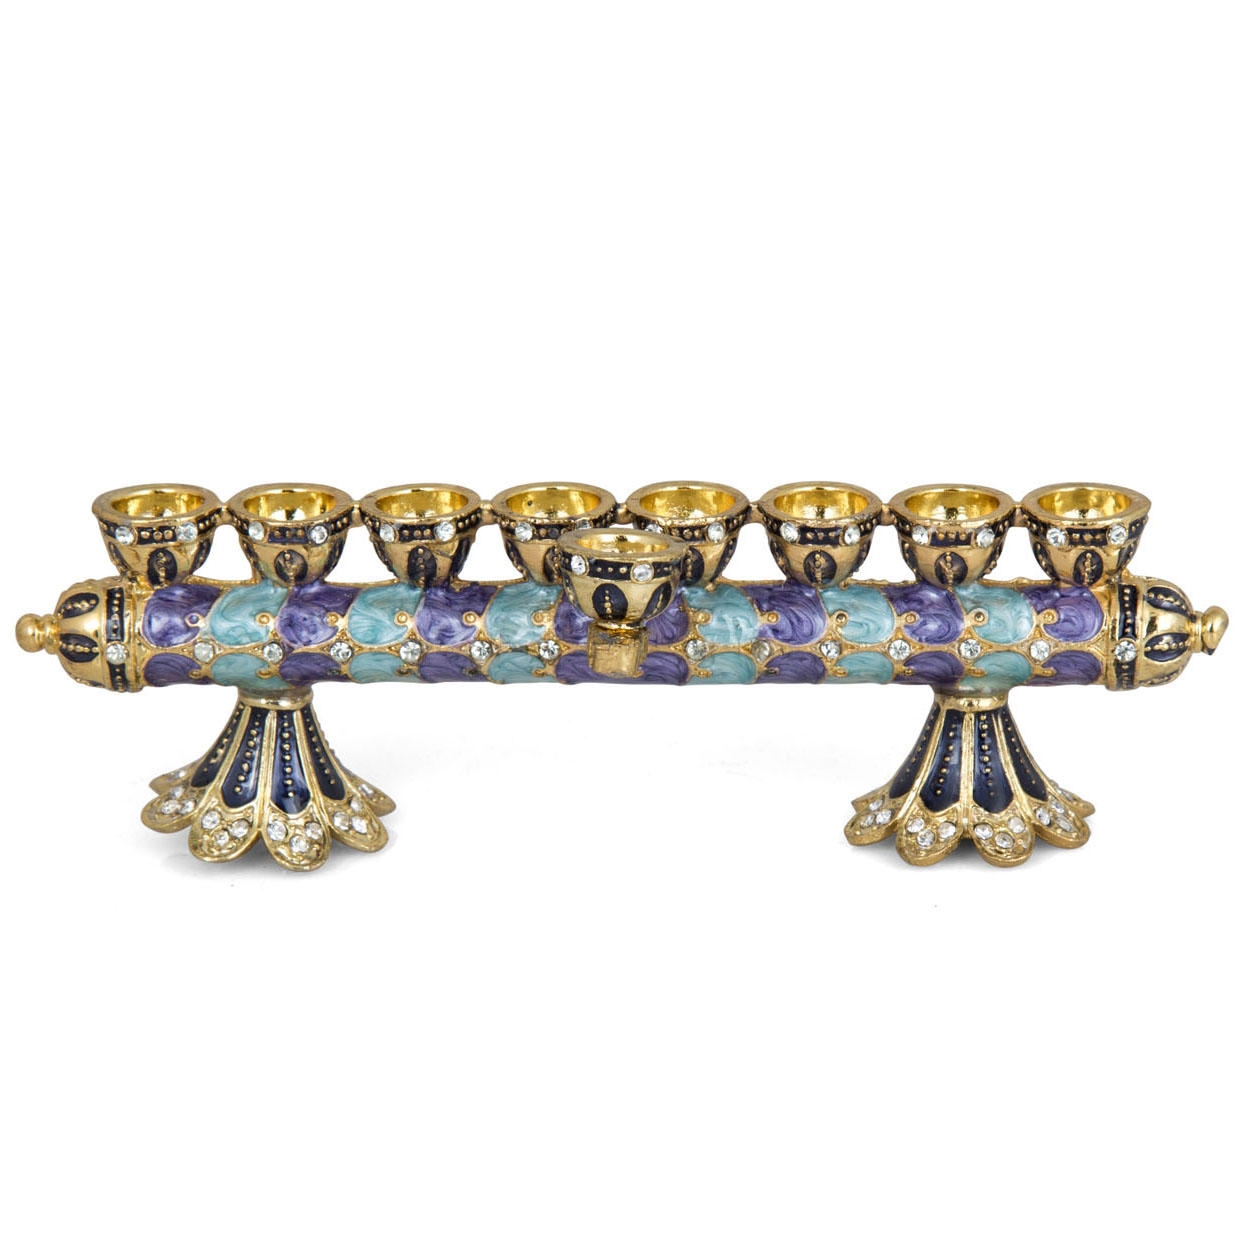 Miniature Upside Down Gold Plated Jeweled Candlesticks/Hanukkah Menorah  - 1